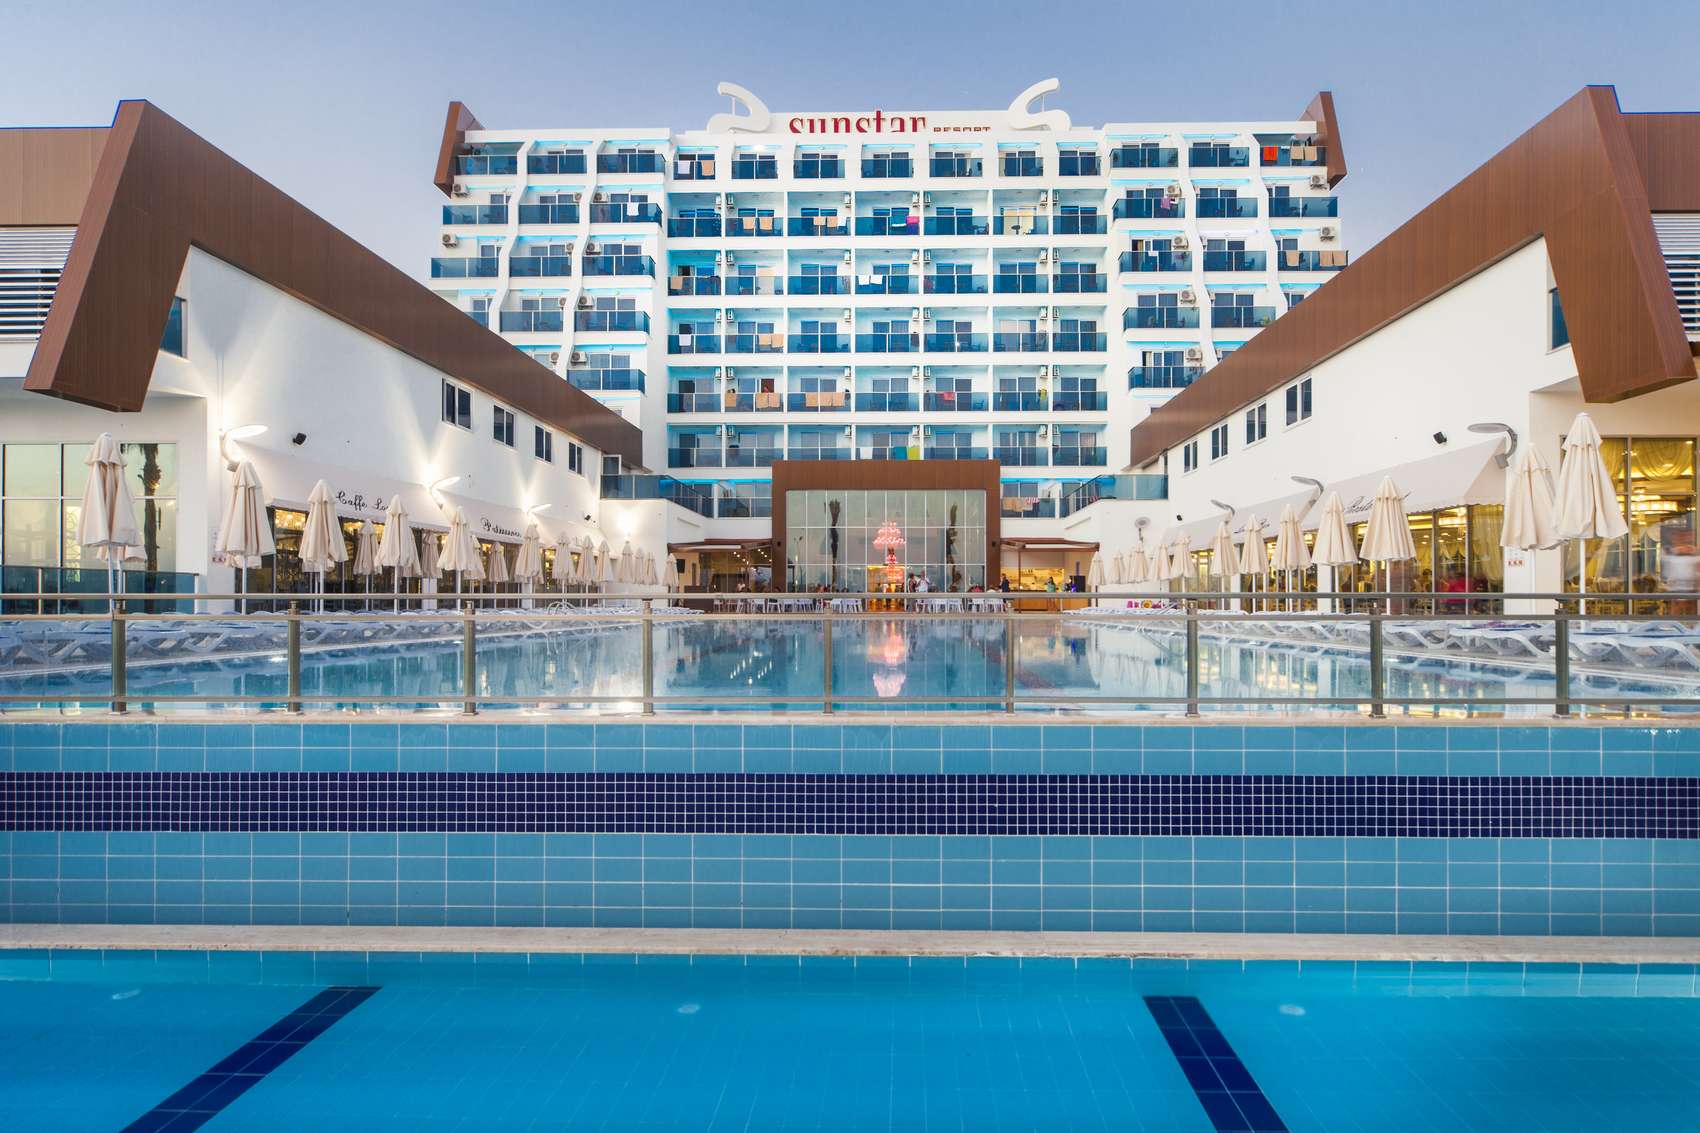 Star 5 b. Sunstar Resort Hotel 5 Турция. Sunstar Resort 5 Турция Аланья. Отель Sun Star Resort 5 Турция. Санстар отель Турция 5 Алания.